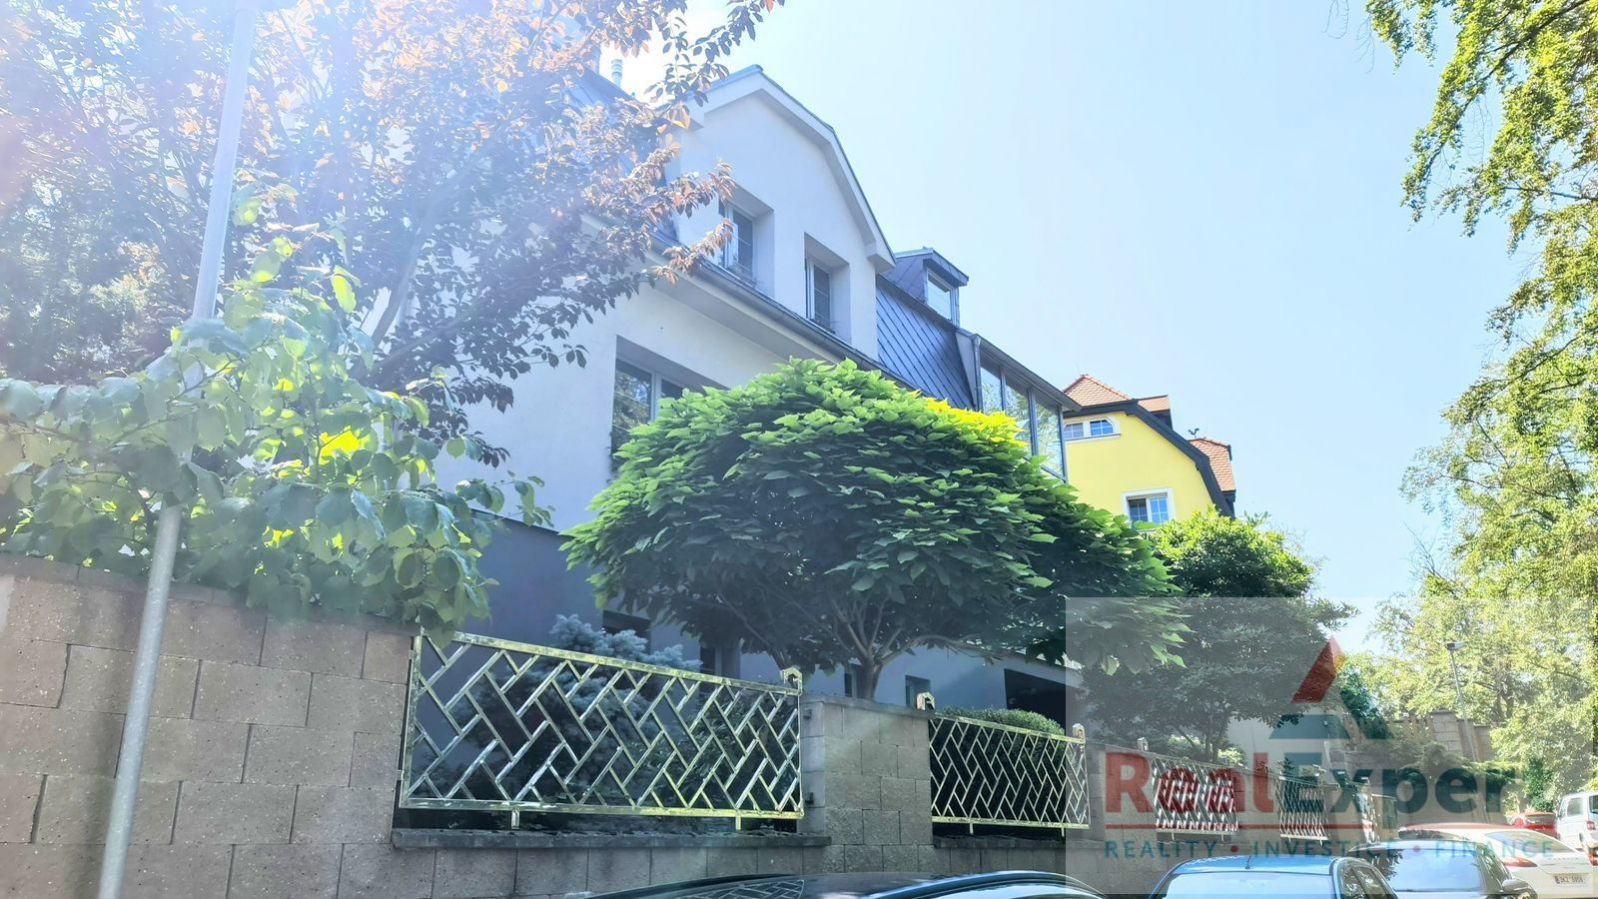 Prodej vily 440 m2, Karlovy Vary, 2 BJ, atelier, garáž, terasa, obrázek č. 2